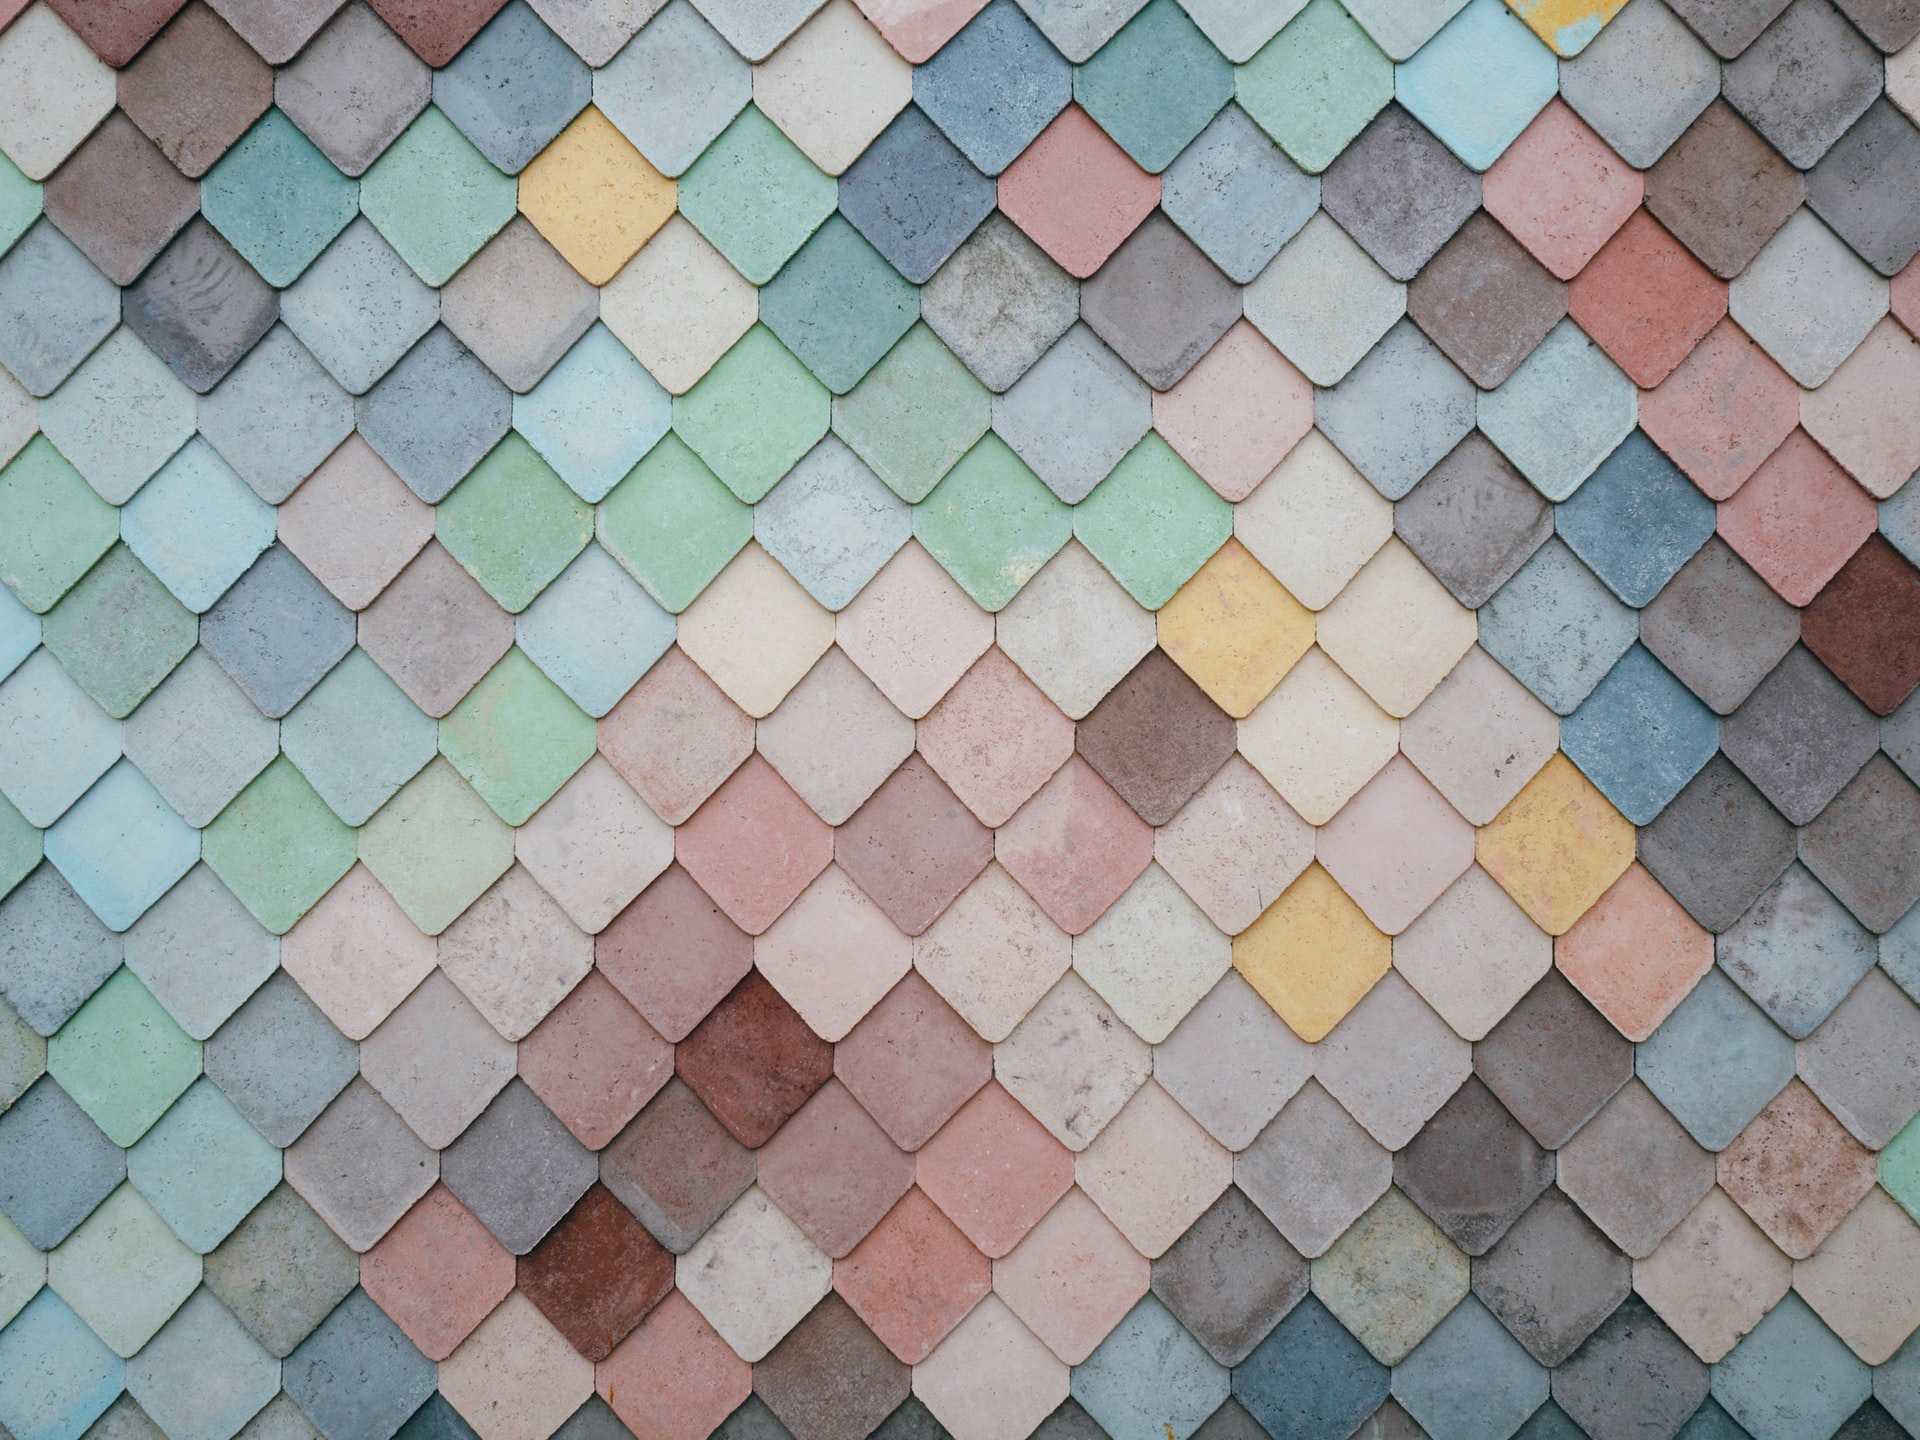 A mosaic of pastel tiles.